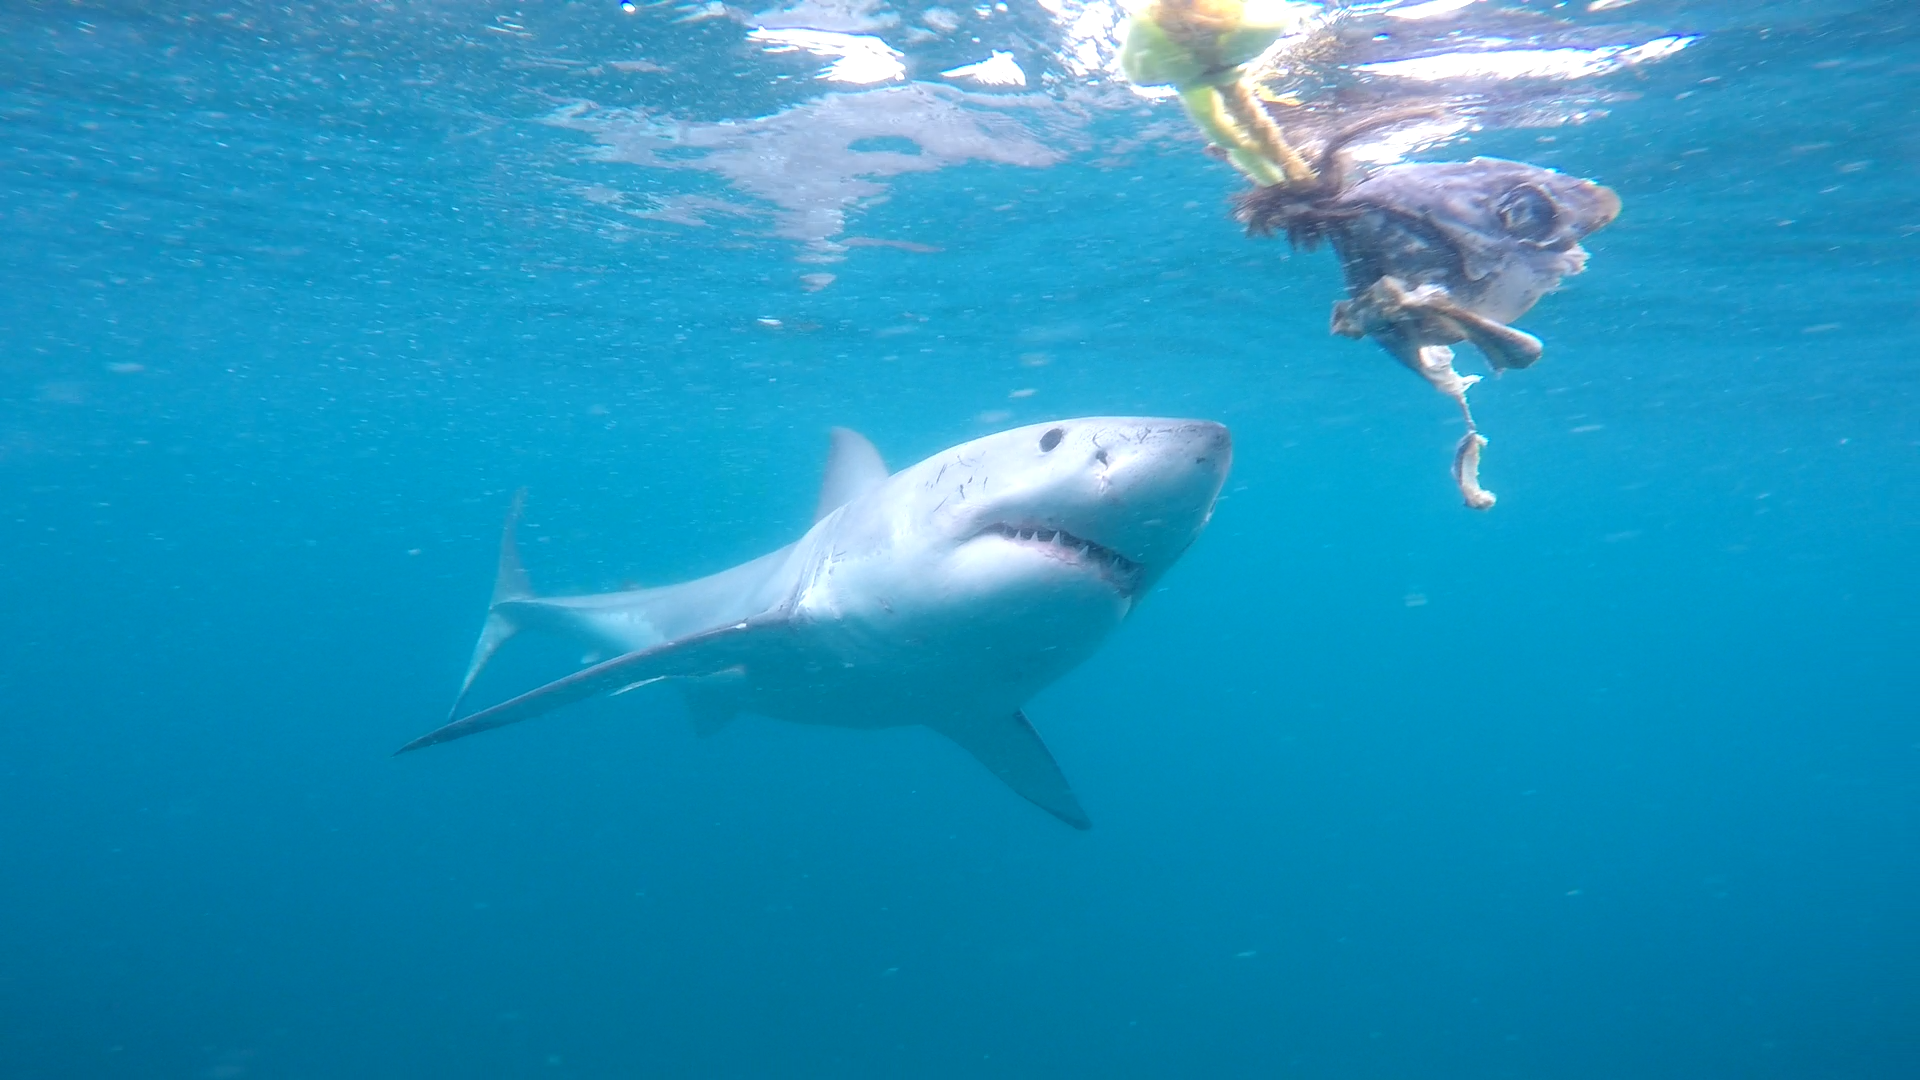 Eﬀects of auditory and visual stimuli on shark feeding behaviour: the disco eﬀect